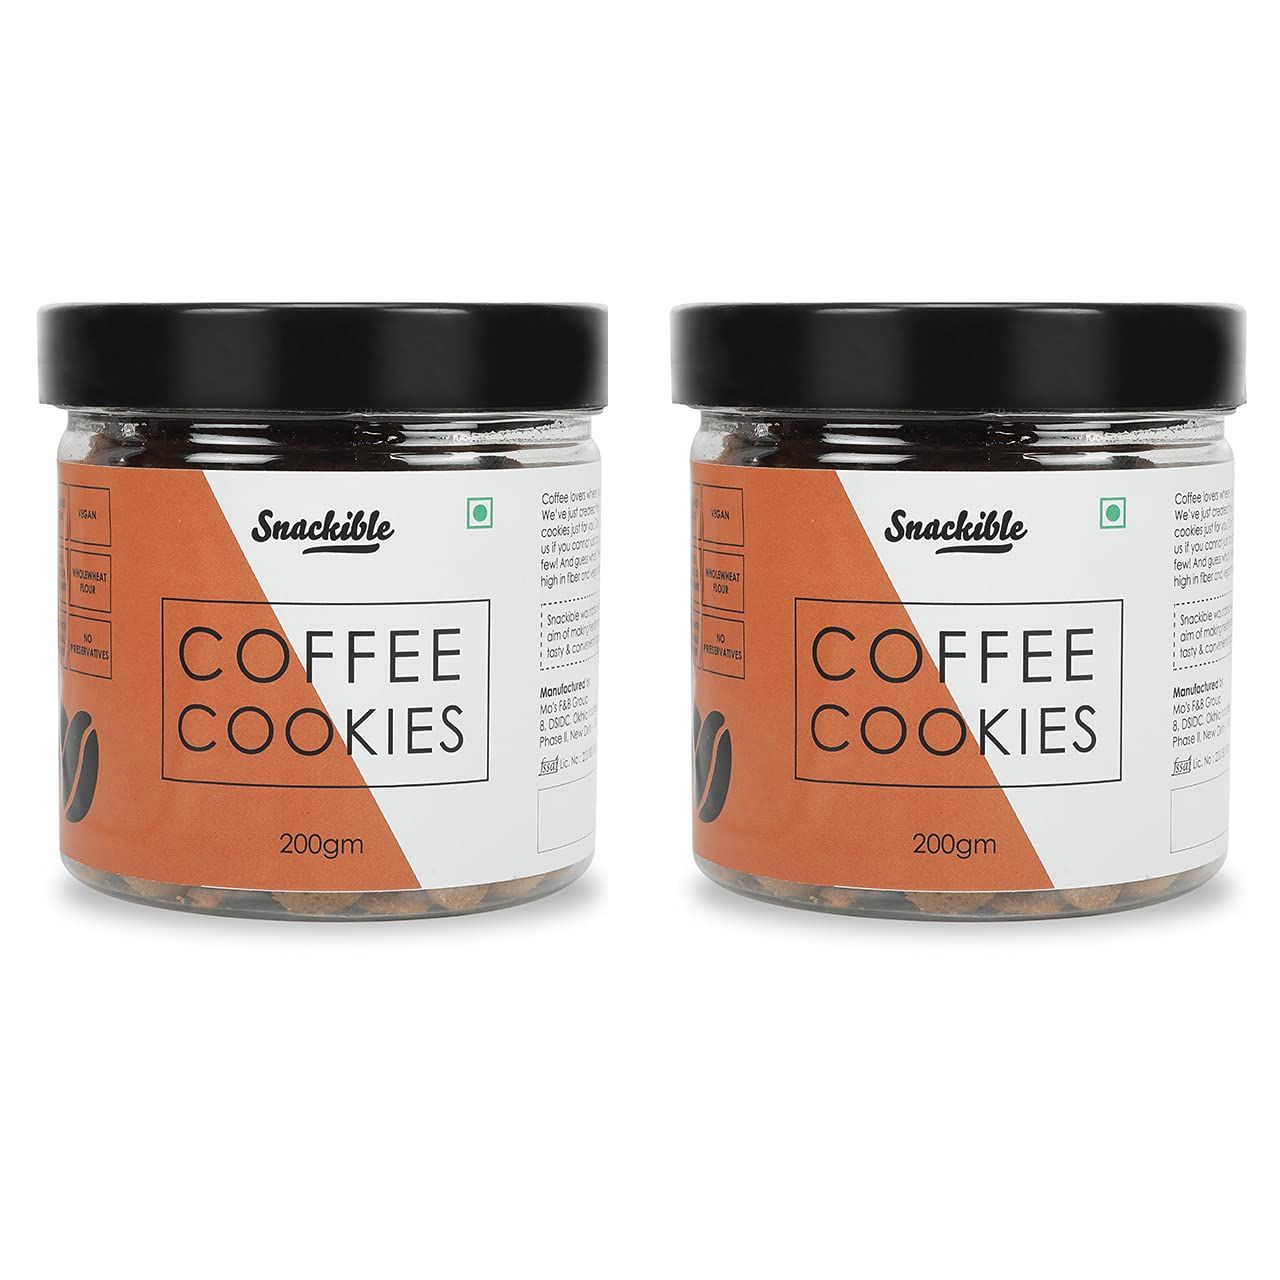 Snackible Coffee Cookies Image